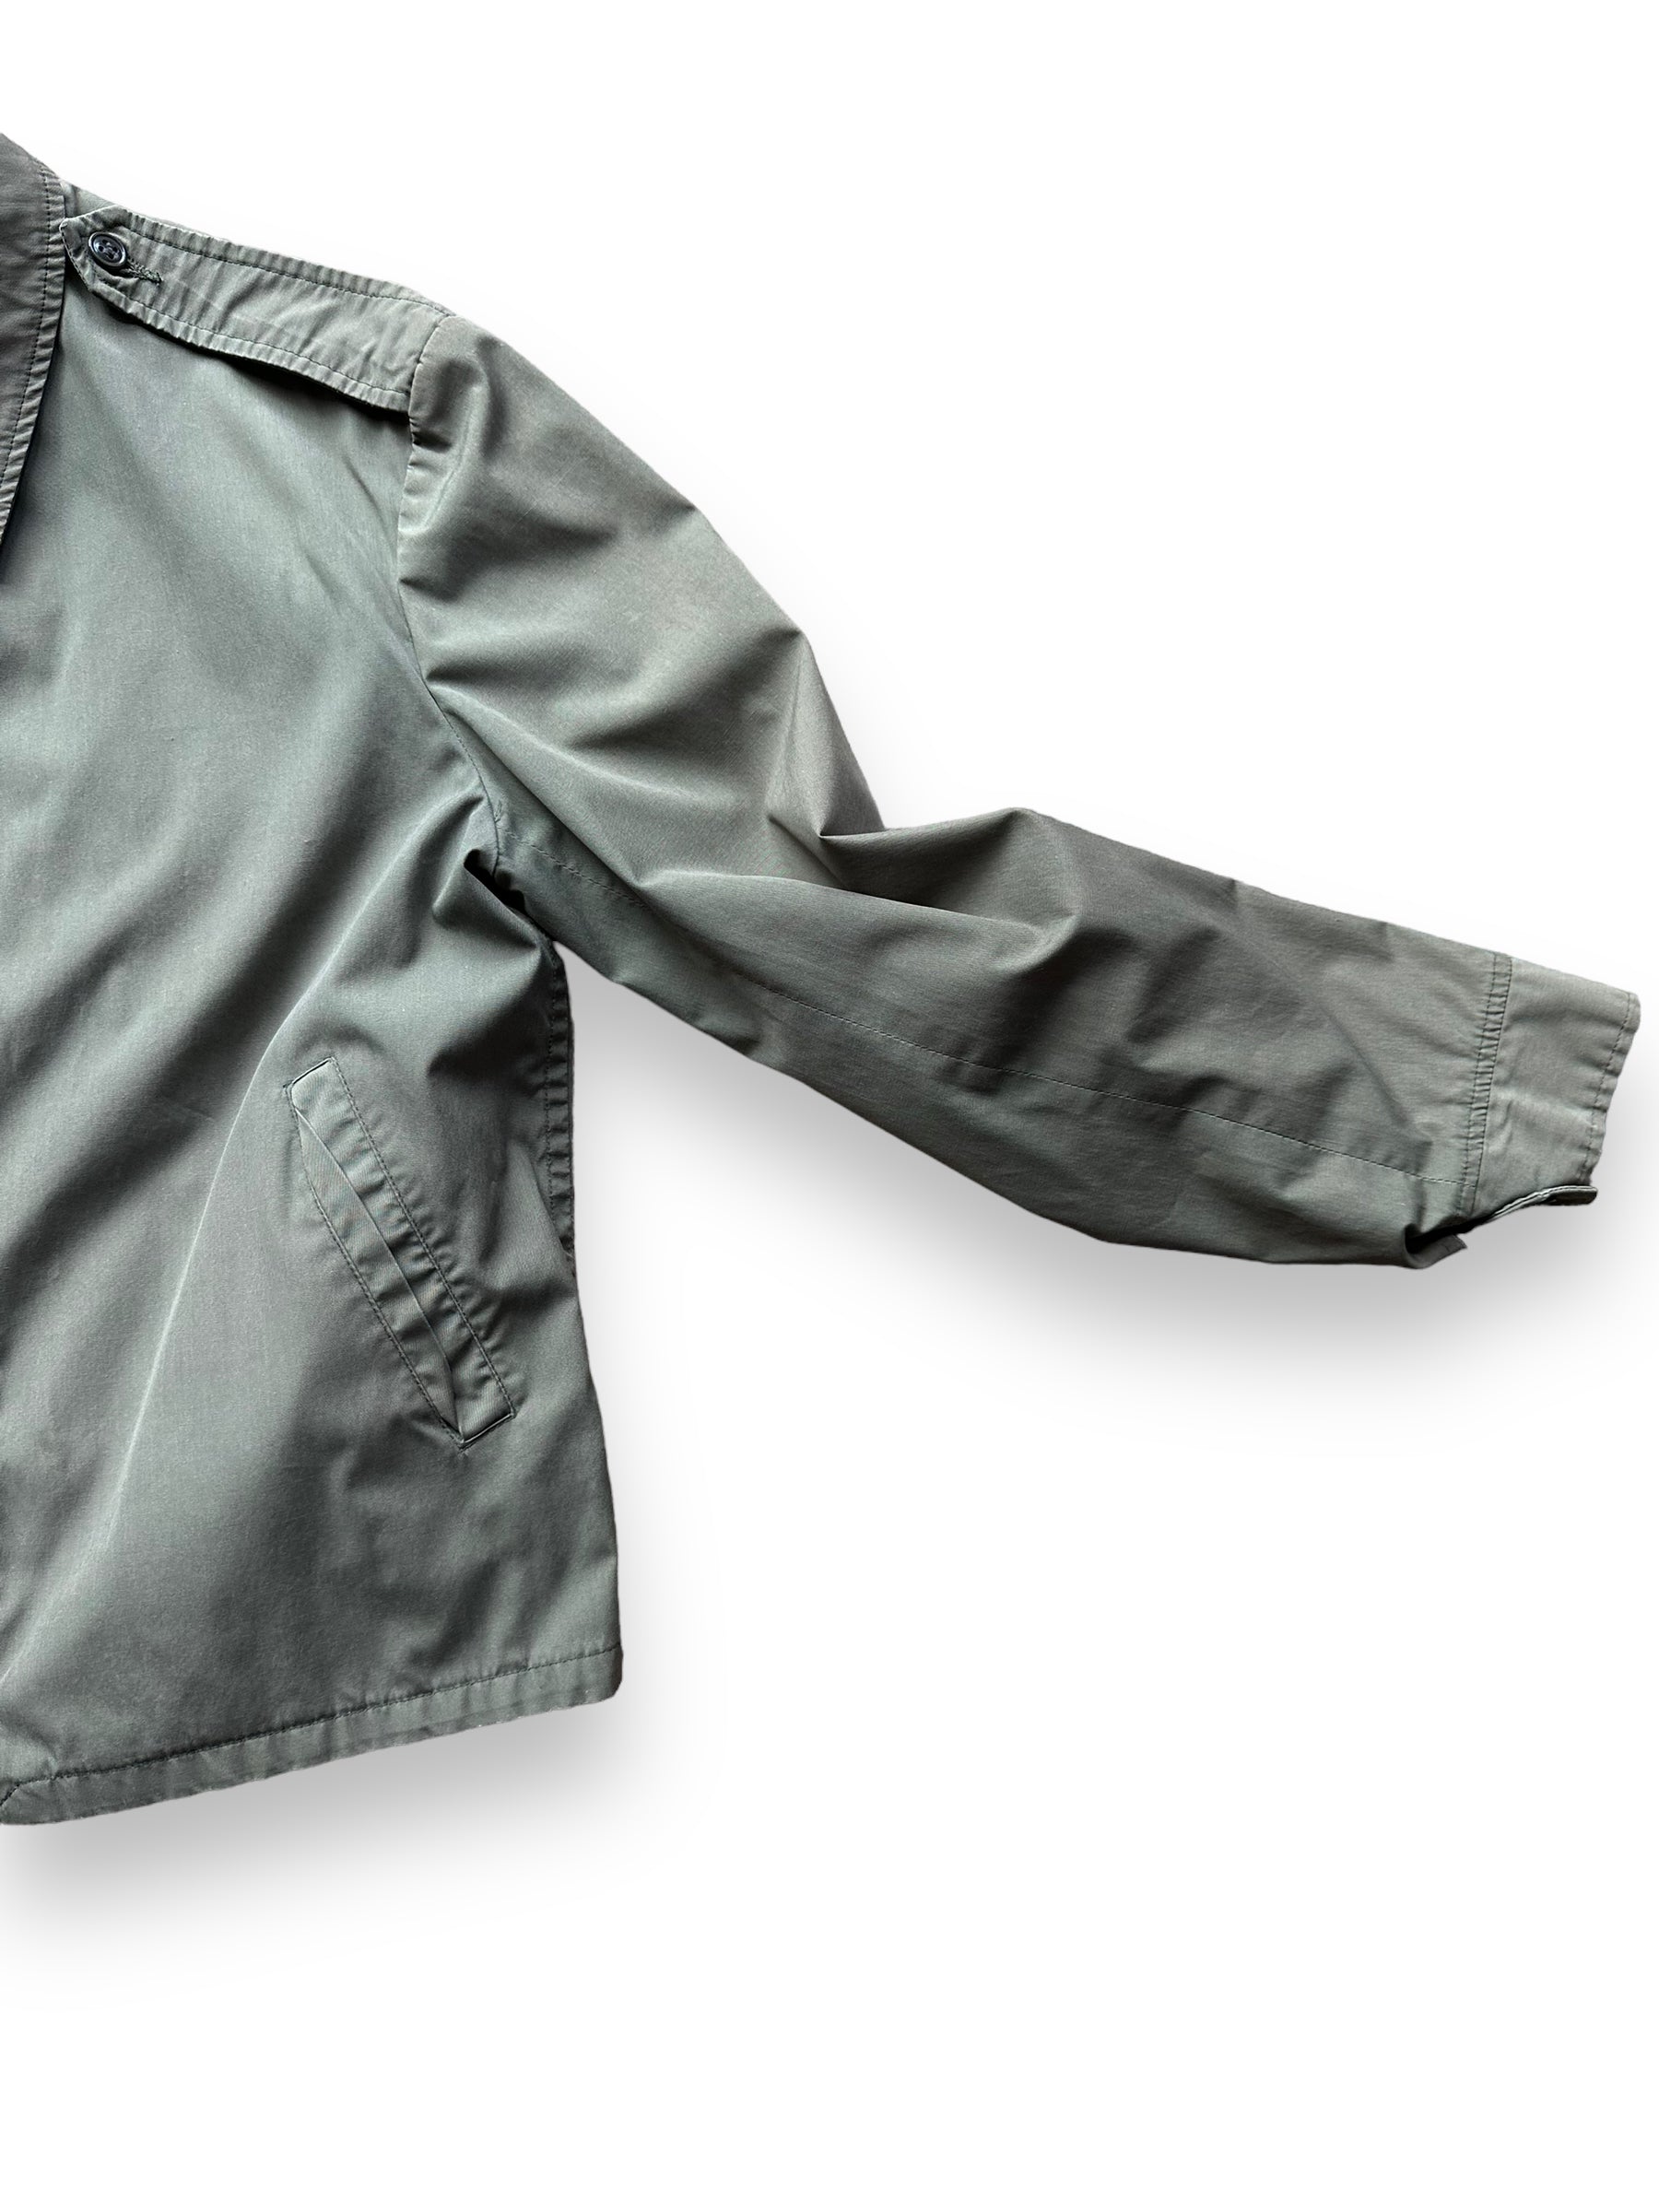 Left Sleeve View on Vintage Lightweight US Army Jacket SZ M-L | Vintage Military Jackets Seattle | Barn Owl Vintage Clothing Seattle